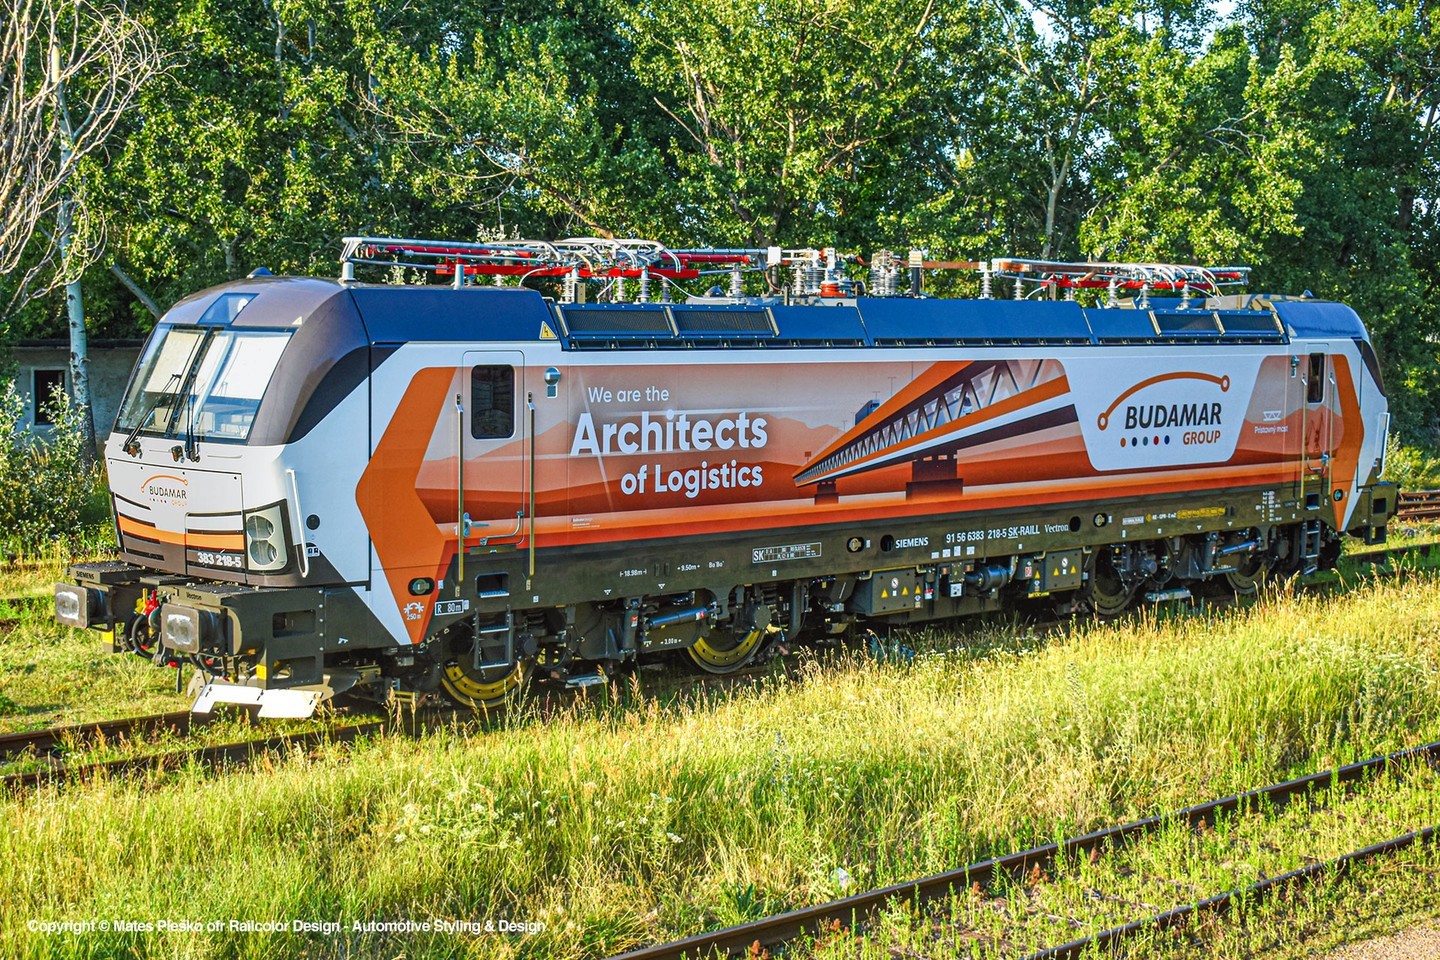 📷 by Matej Pleško 🇸🇰 “Architects of Logistics” – Budamar Group launches first design locomotive ⬆️ designed by @RailcolorDesign
.
.
.
.
.
#Budamar #siemens #vectron #siemensvectron #383 #383218 #6383218 #electriclocomotive #railways #railways_of_europe #railcolornews #ellok #budamarvectron #locomotive #architectsoflogistics #budamargroup #siemens_mobility #trainstagram #railways #bahn #eisenbahn #zeleznice #eisenbahnbilder #zugbilder #vlaky #rusen #rušeň #lokomotiva #pristavnymost #budamarlogistics